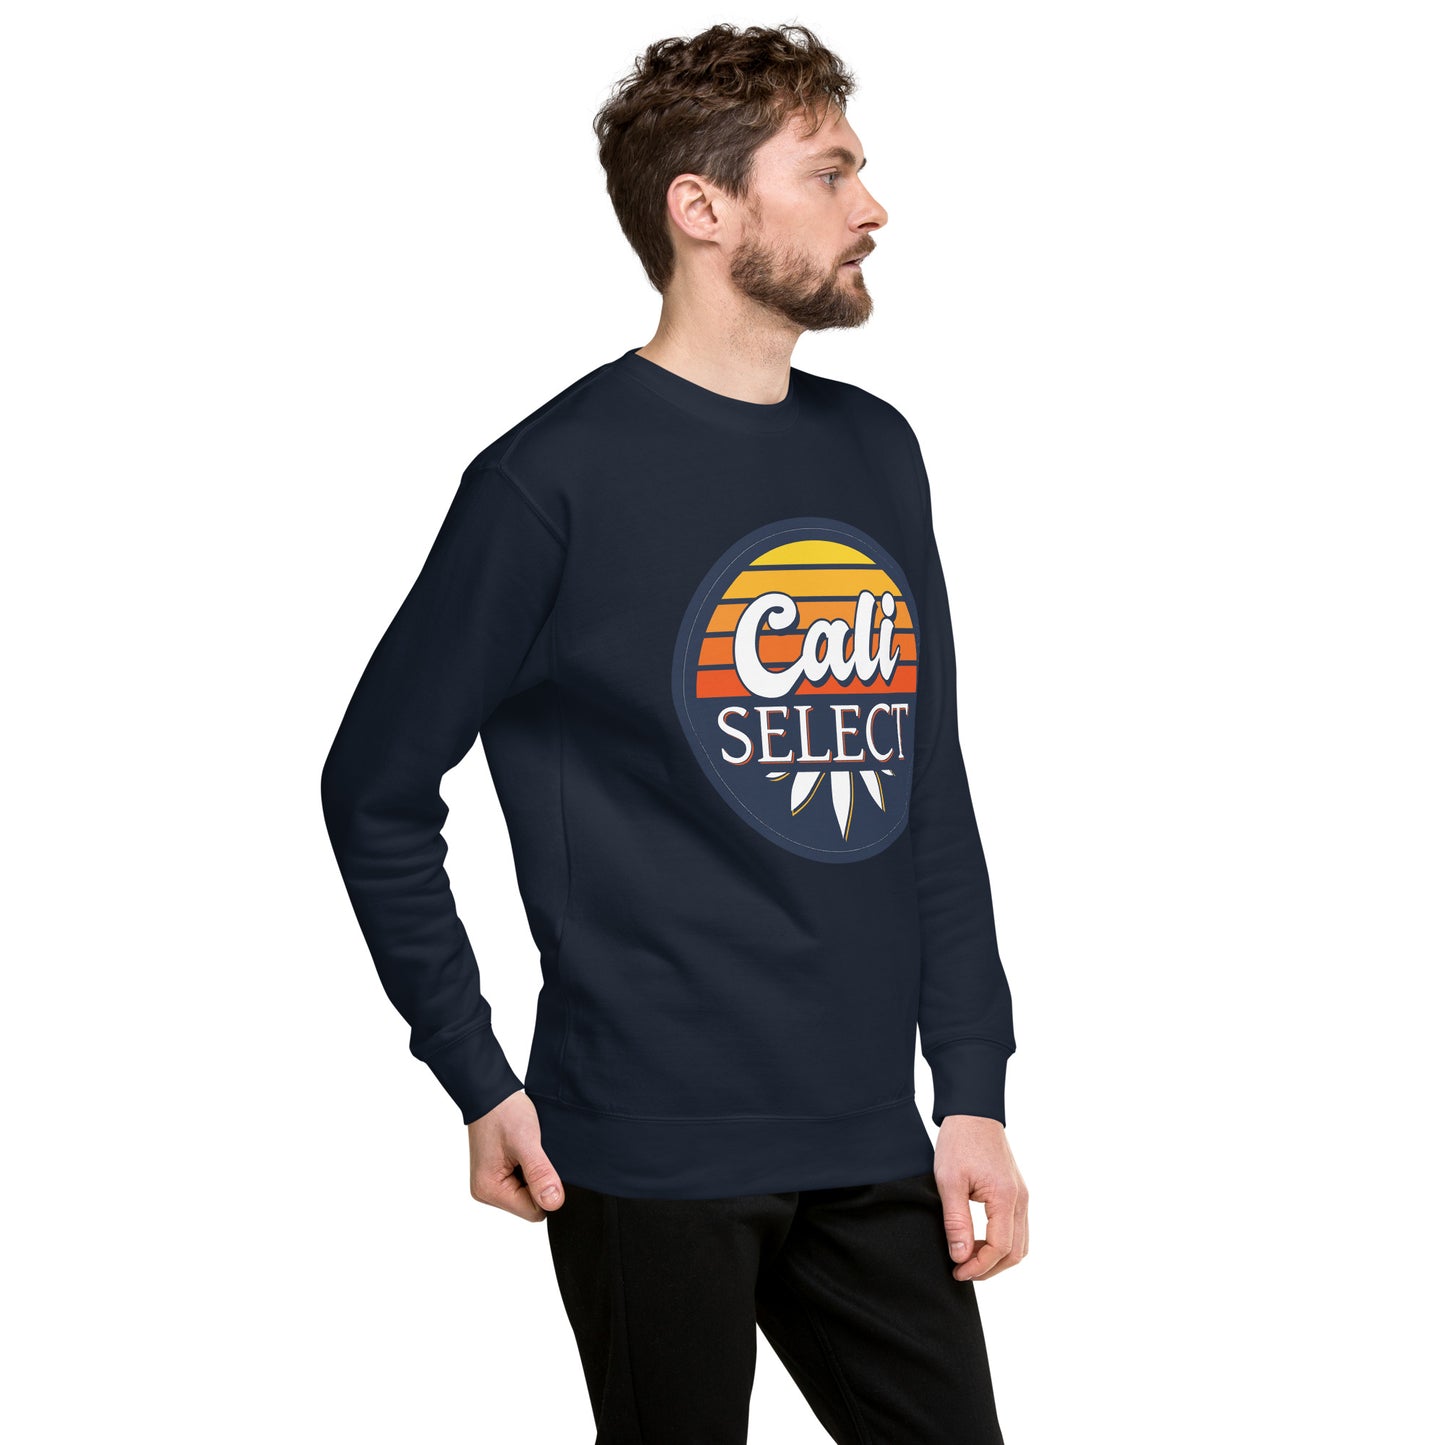 Cali Select Unisex Premium Sweatshirt